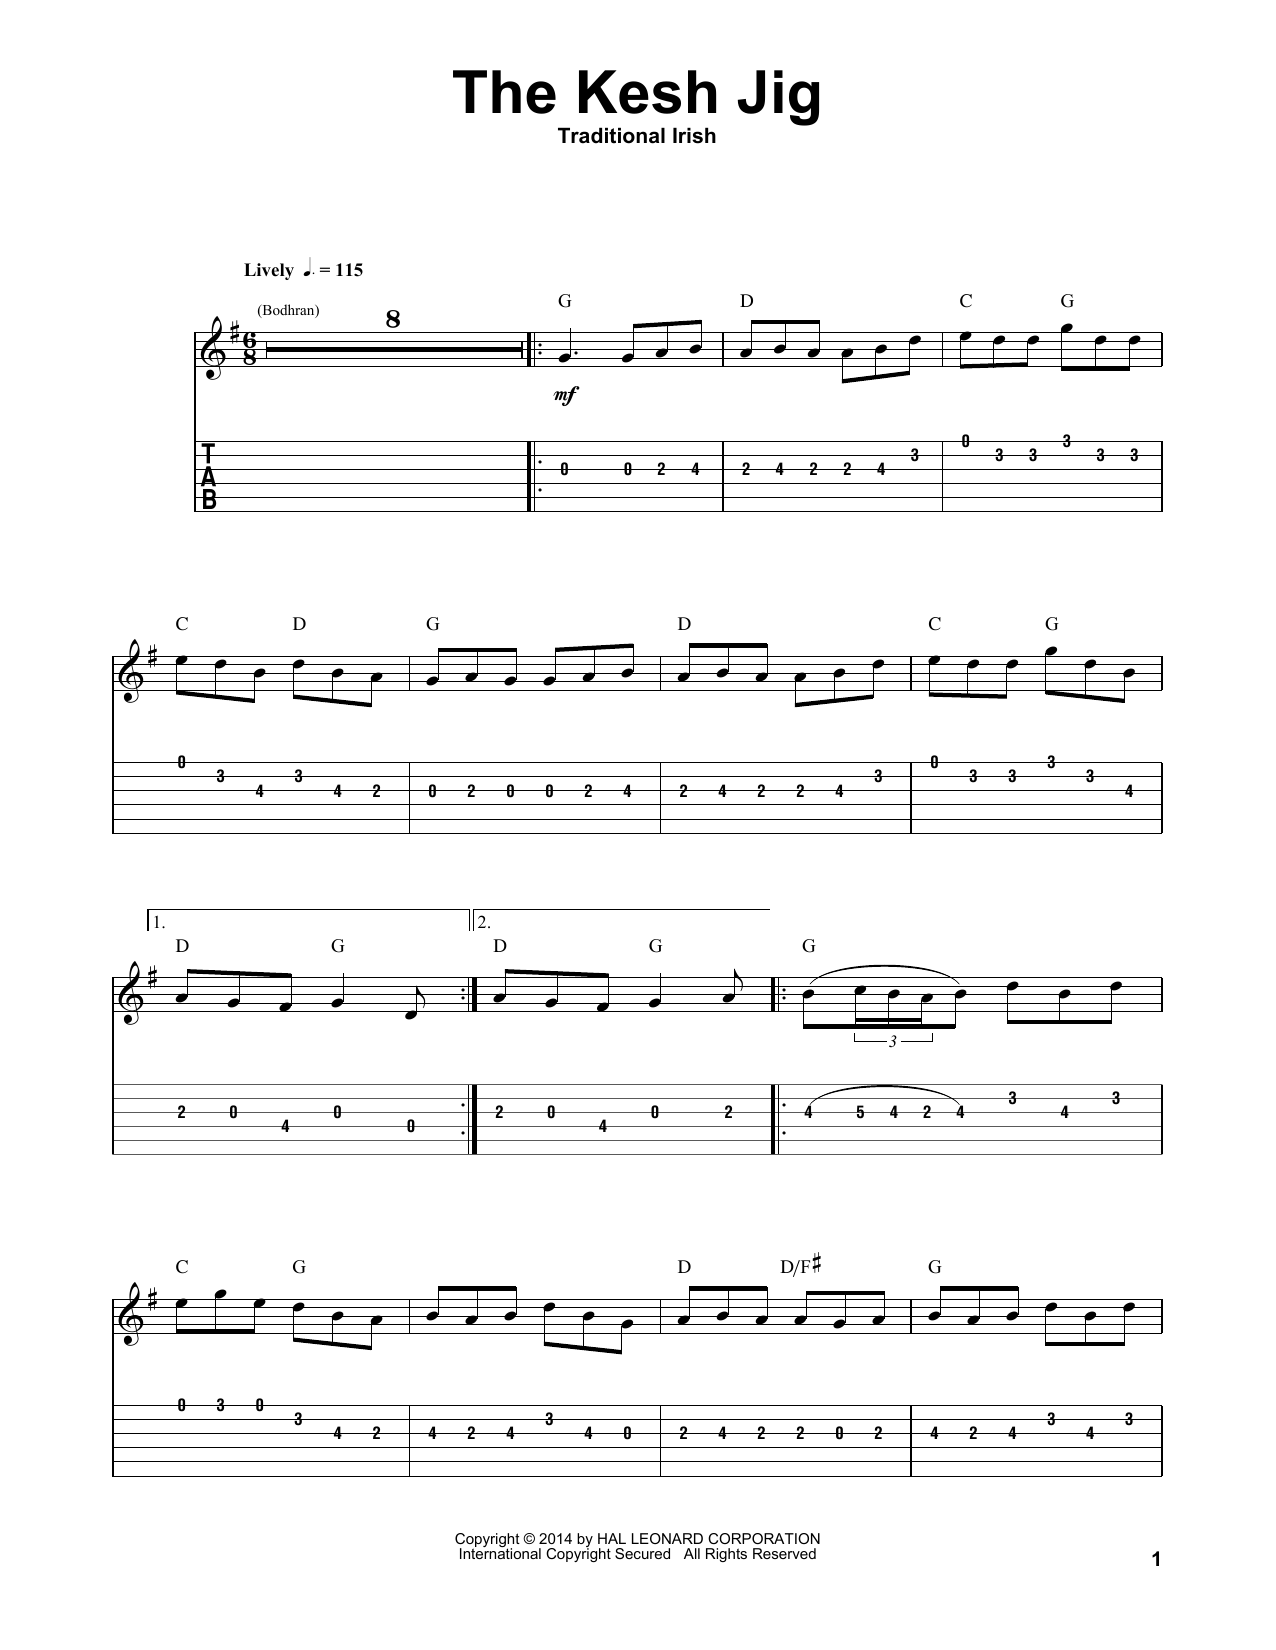 Irish Folksong The Kesh Jig Sheet Music Notes & Chords for Guitar Tab Play-Along - Download or Print PDF